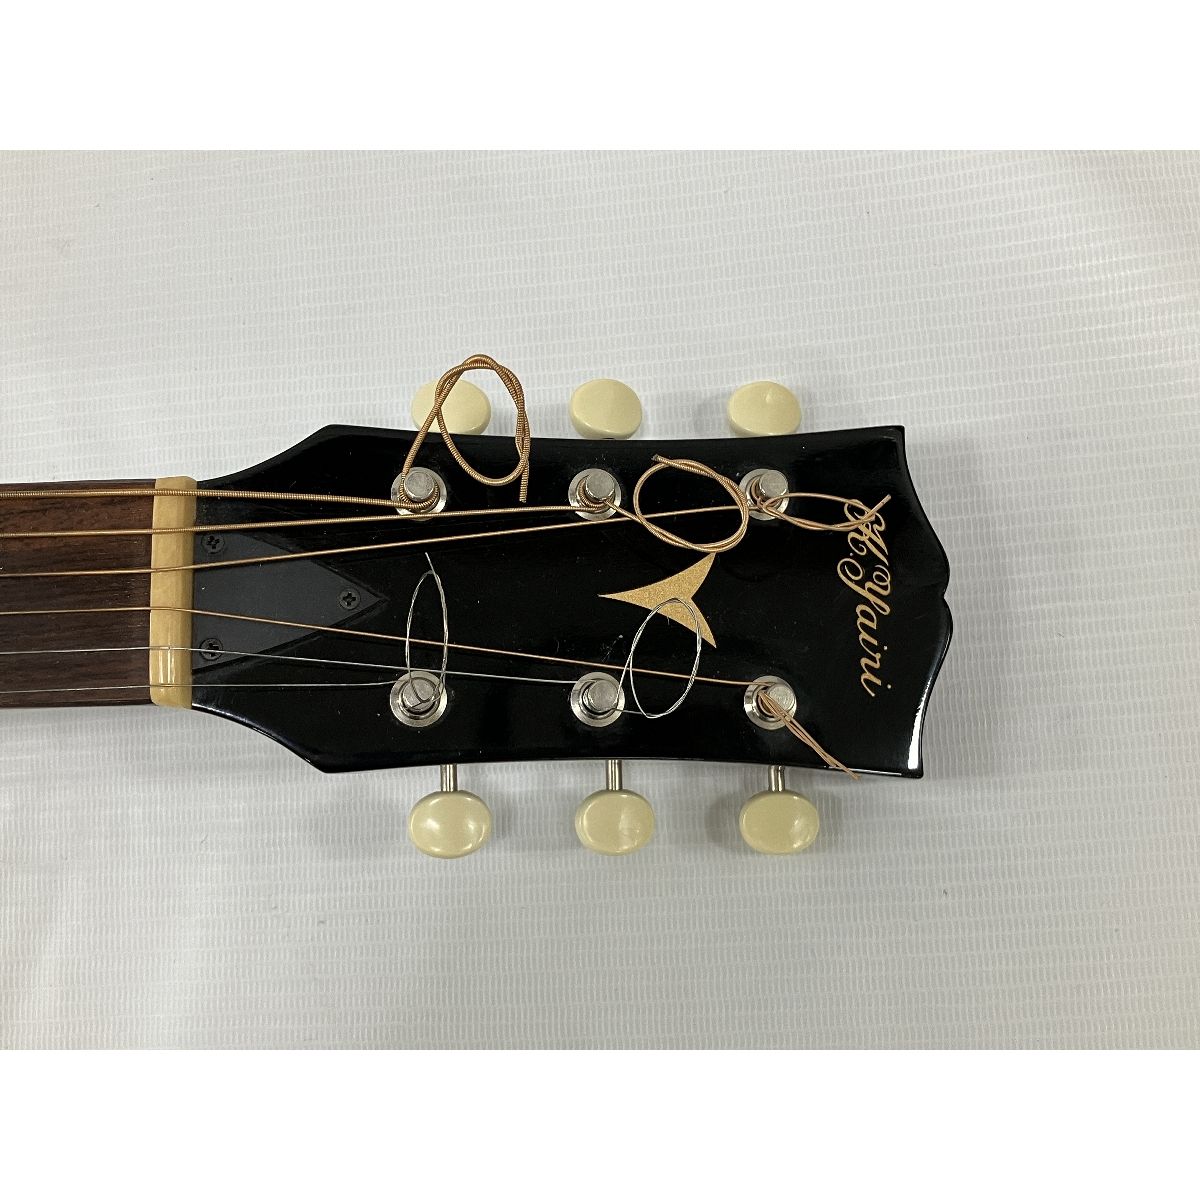 K.Yairi 【動作保証】K.yairi RP-1 アコースティックギター アコギ ハードケース付き 楽器  H8936323